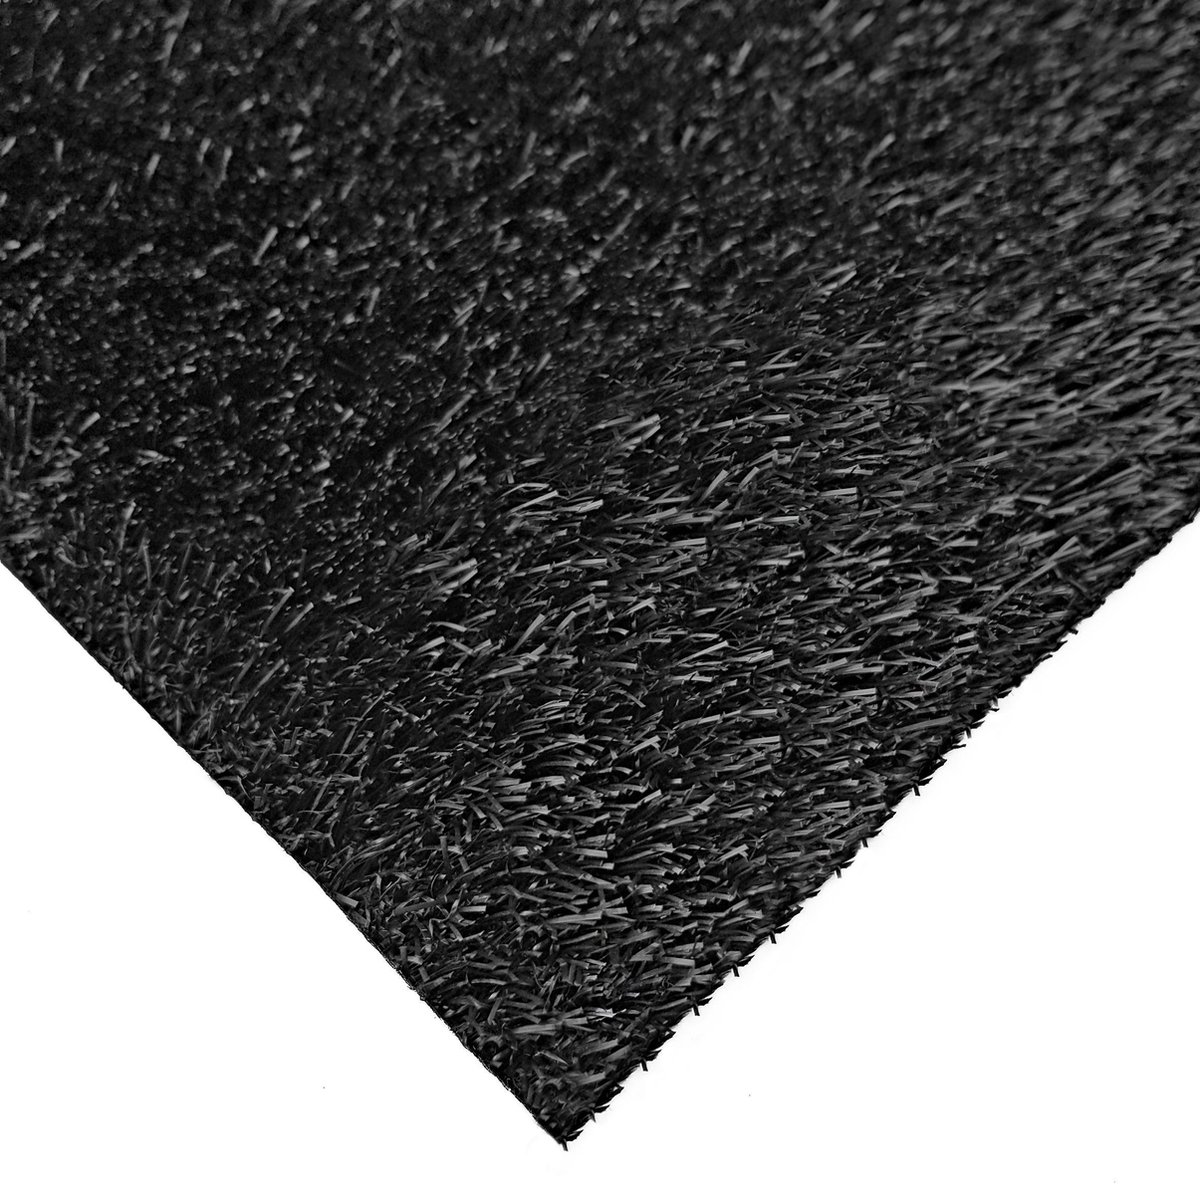 Kunstgras Tapijt RAINBOW Black Shadow - 250x330cm - 25mm|artificial grass|gazon artificiel|....|tuin|balkon|terras|kinderkamer|speelkamer|grastapijt|grasmat|buiten|binnen|kerst